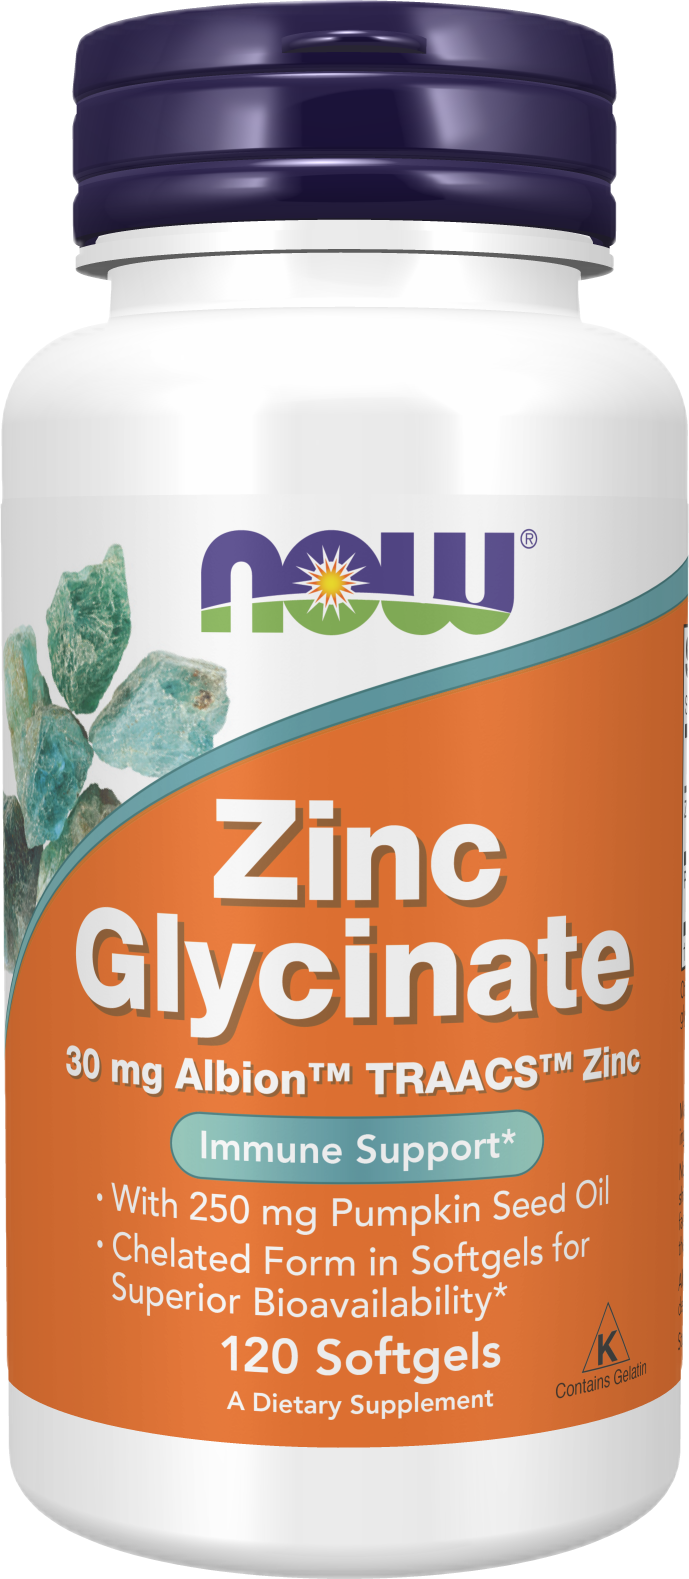 Zinc Glycinate 30 mg - BadiZdrav.BG